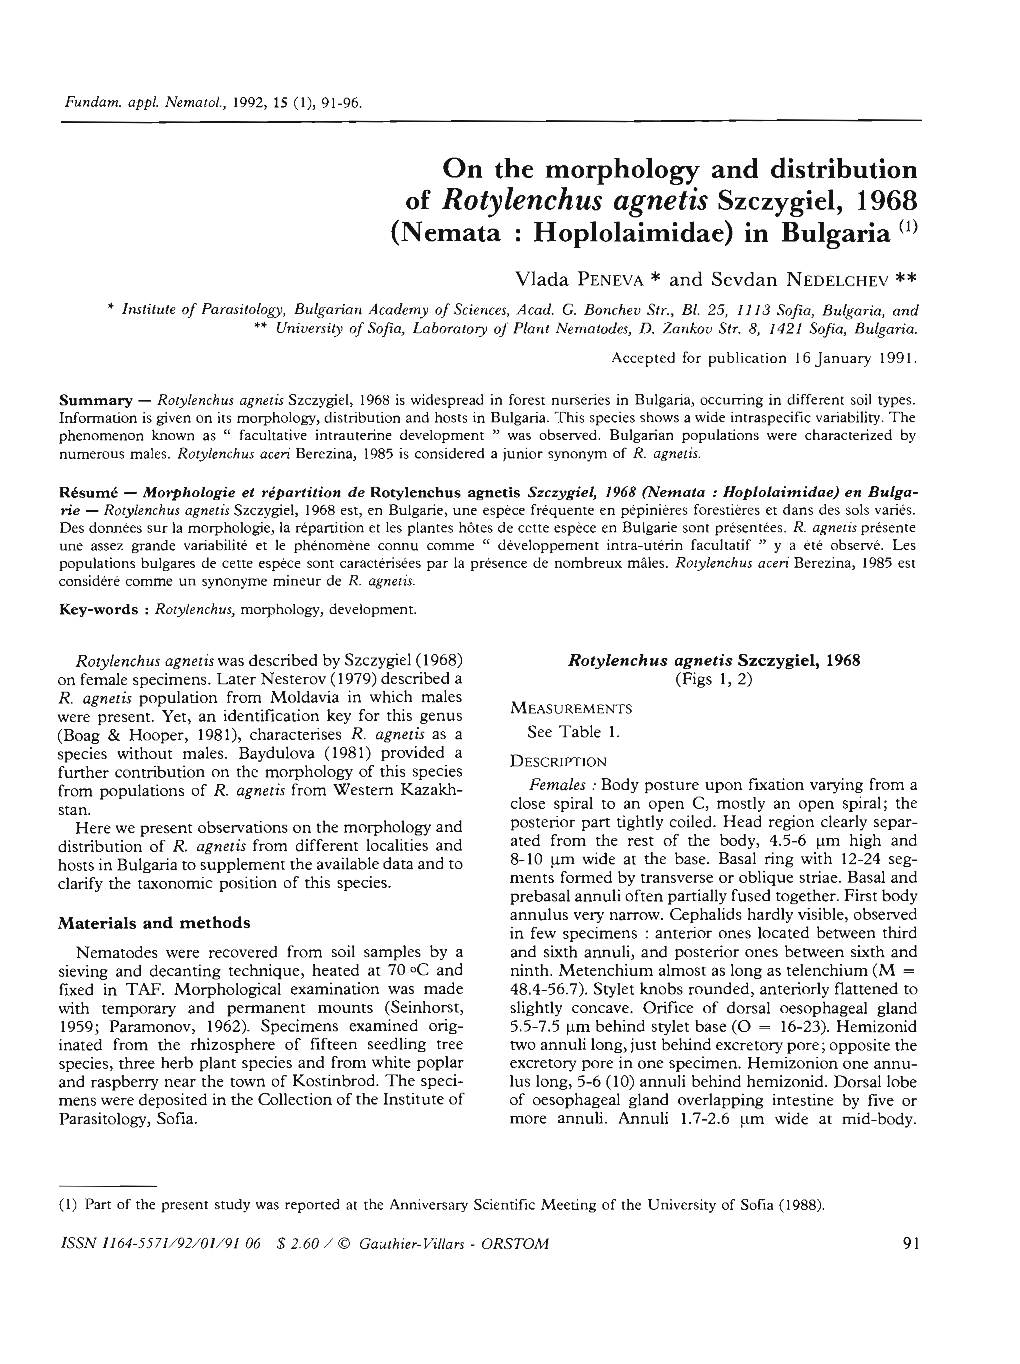 On the Morphology and Distribution of Rotylenchus Agnetis Szczygiel, 1968 (Nemata : Hoplolaimidae) in Bulgaria (L)